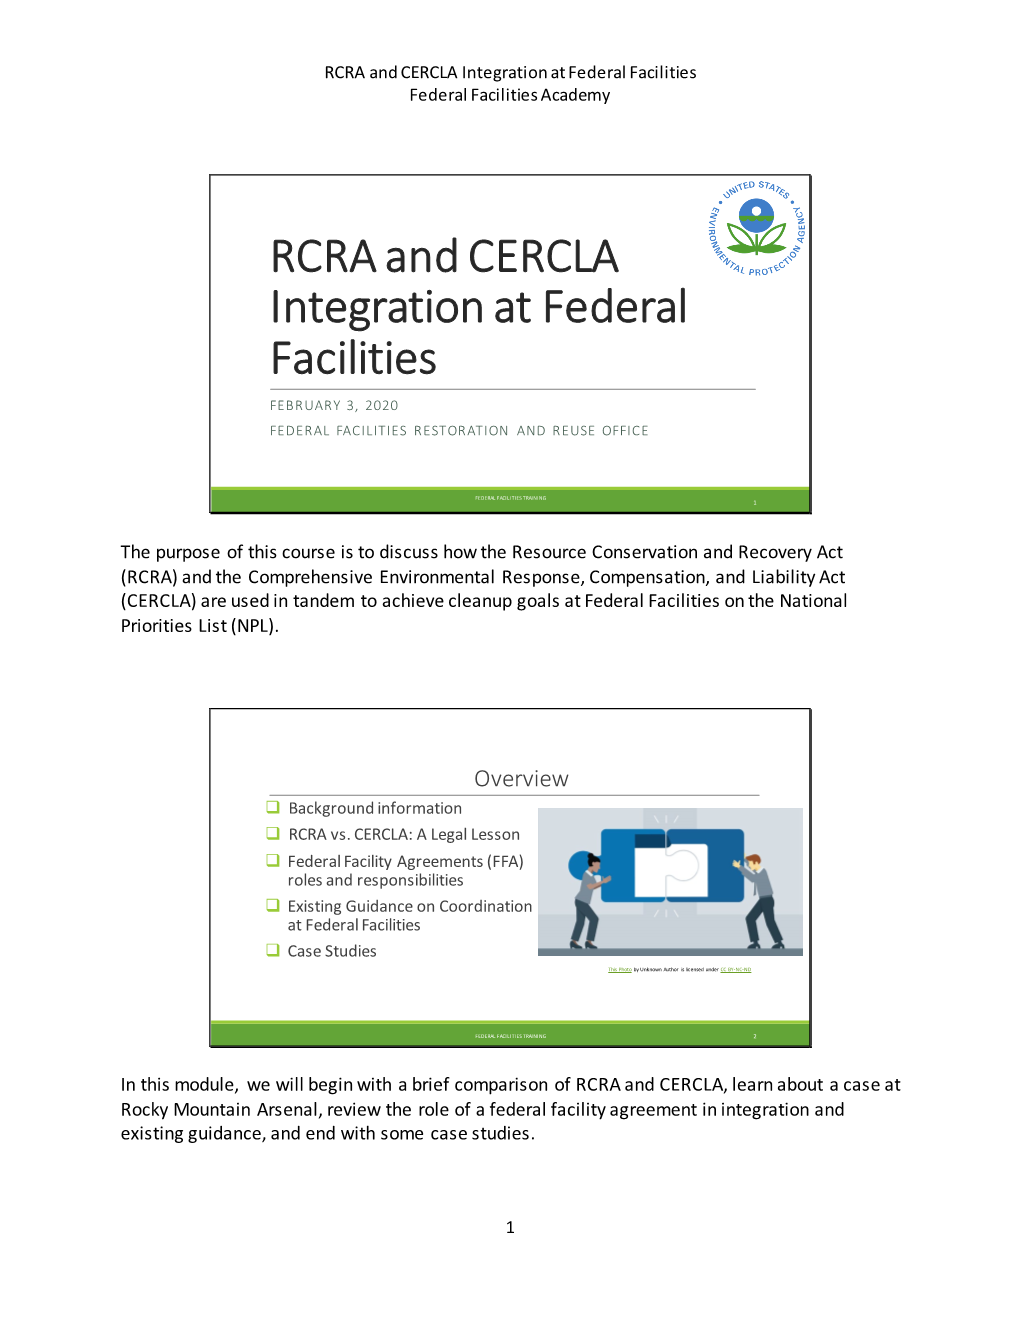 RCRA and CERCLA Integration at Federal Facilities Federal Facilities Academy